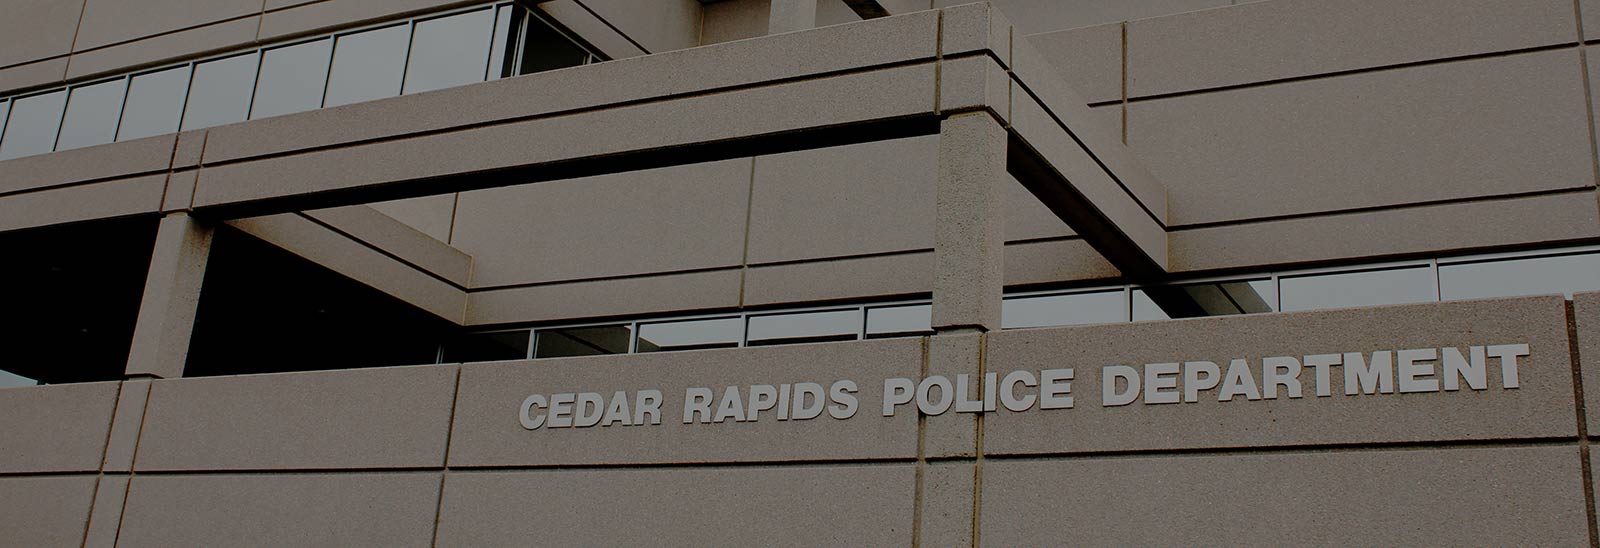 cedar-rapids-joint-communication-Police-Station-Evans-case-study